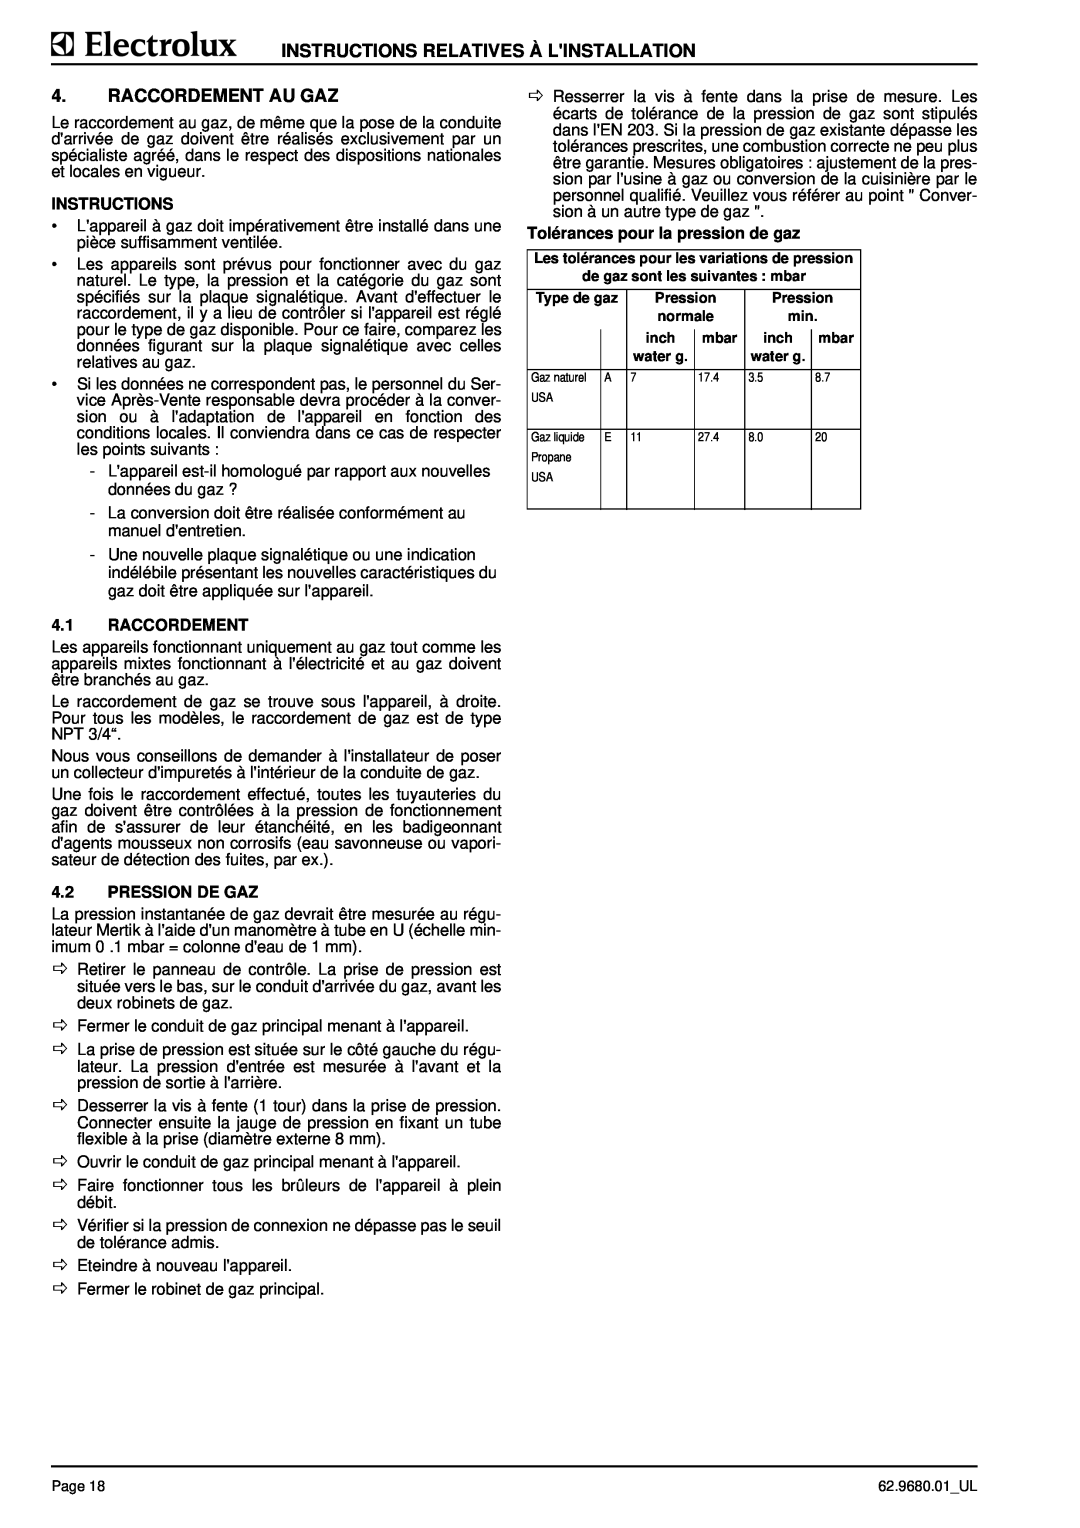 Electrolux WKGROFOOOO Instructions Relatives À Linstallation, Raccordement Au Gaz, 4.1RACCORDEMENT, 4.2PRESSION DE GAZ 